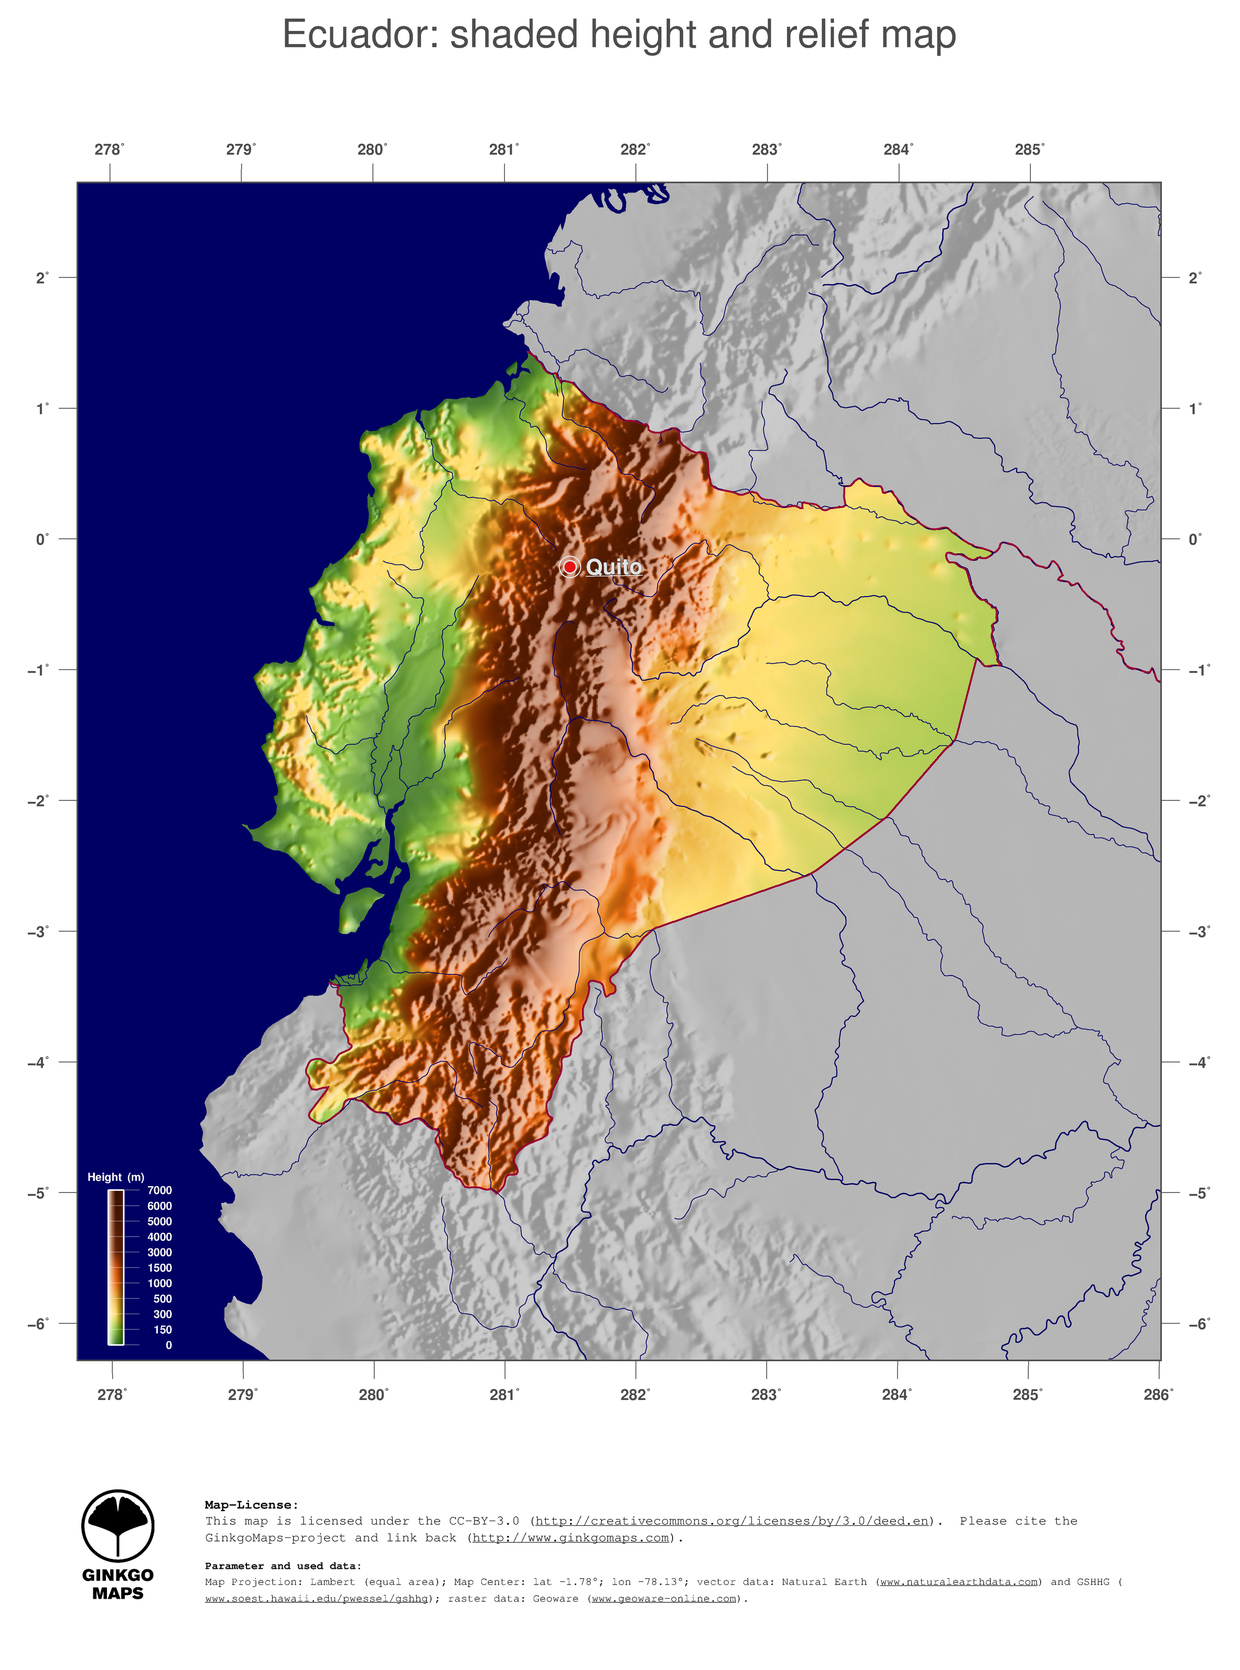 http://www.ginkgomaps.com/en/rl3c_ec_ecuador_map_illdtmcolgw30s_ja_mres.jpg